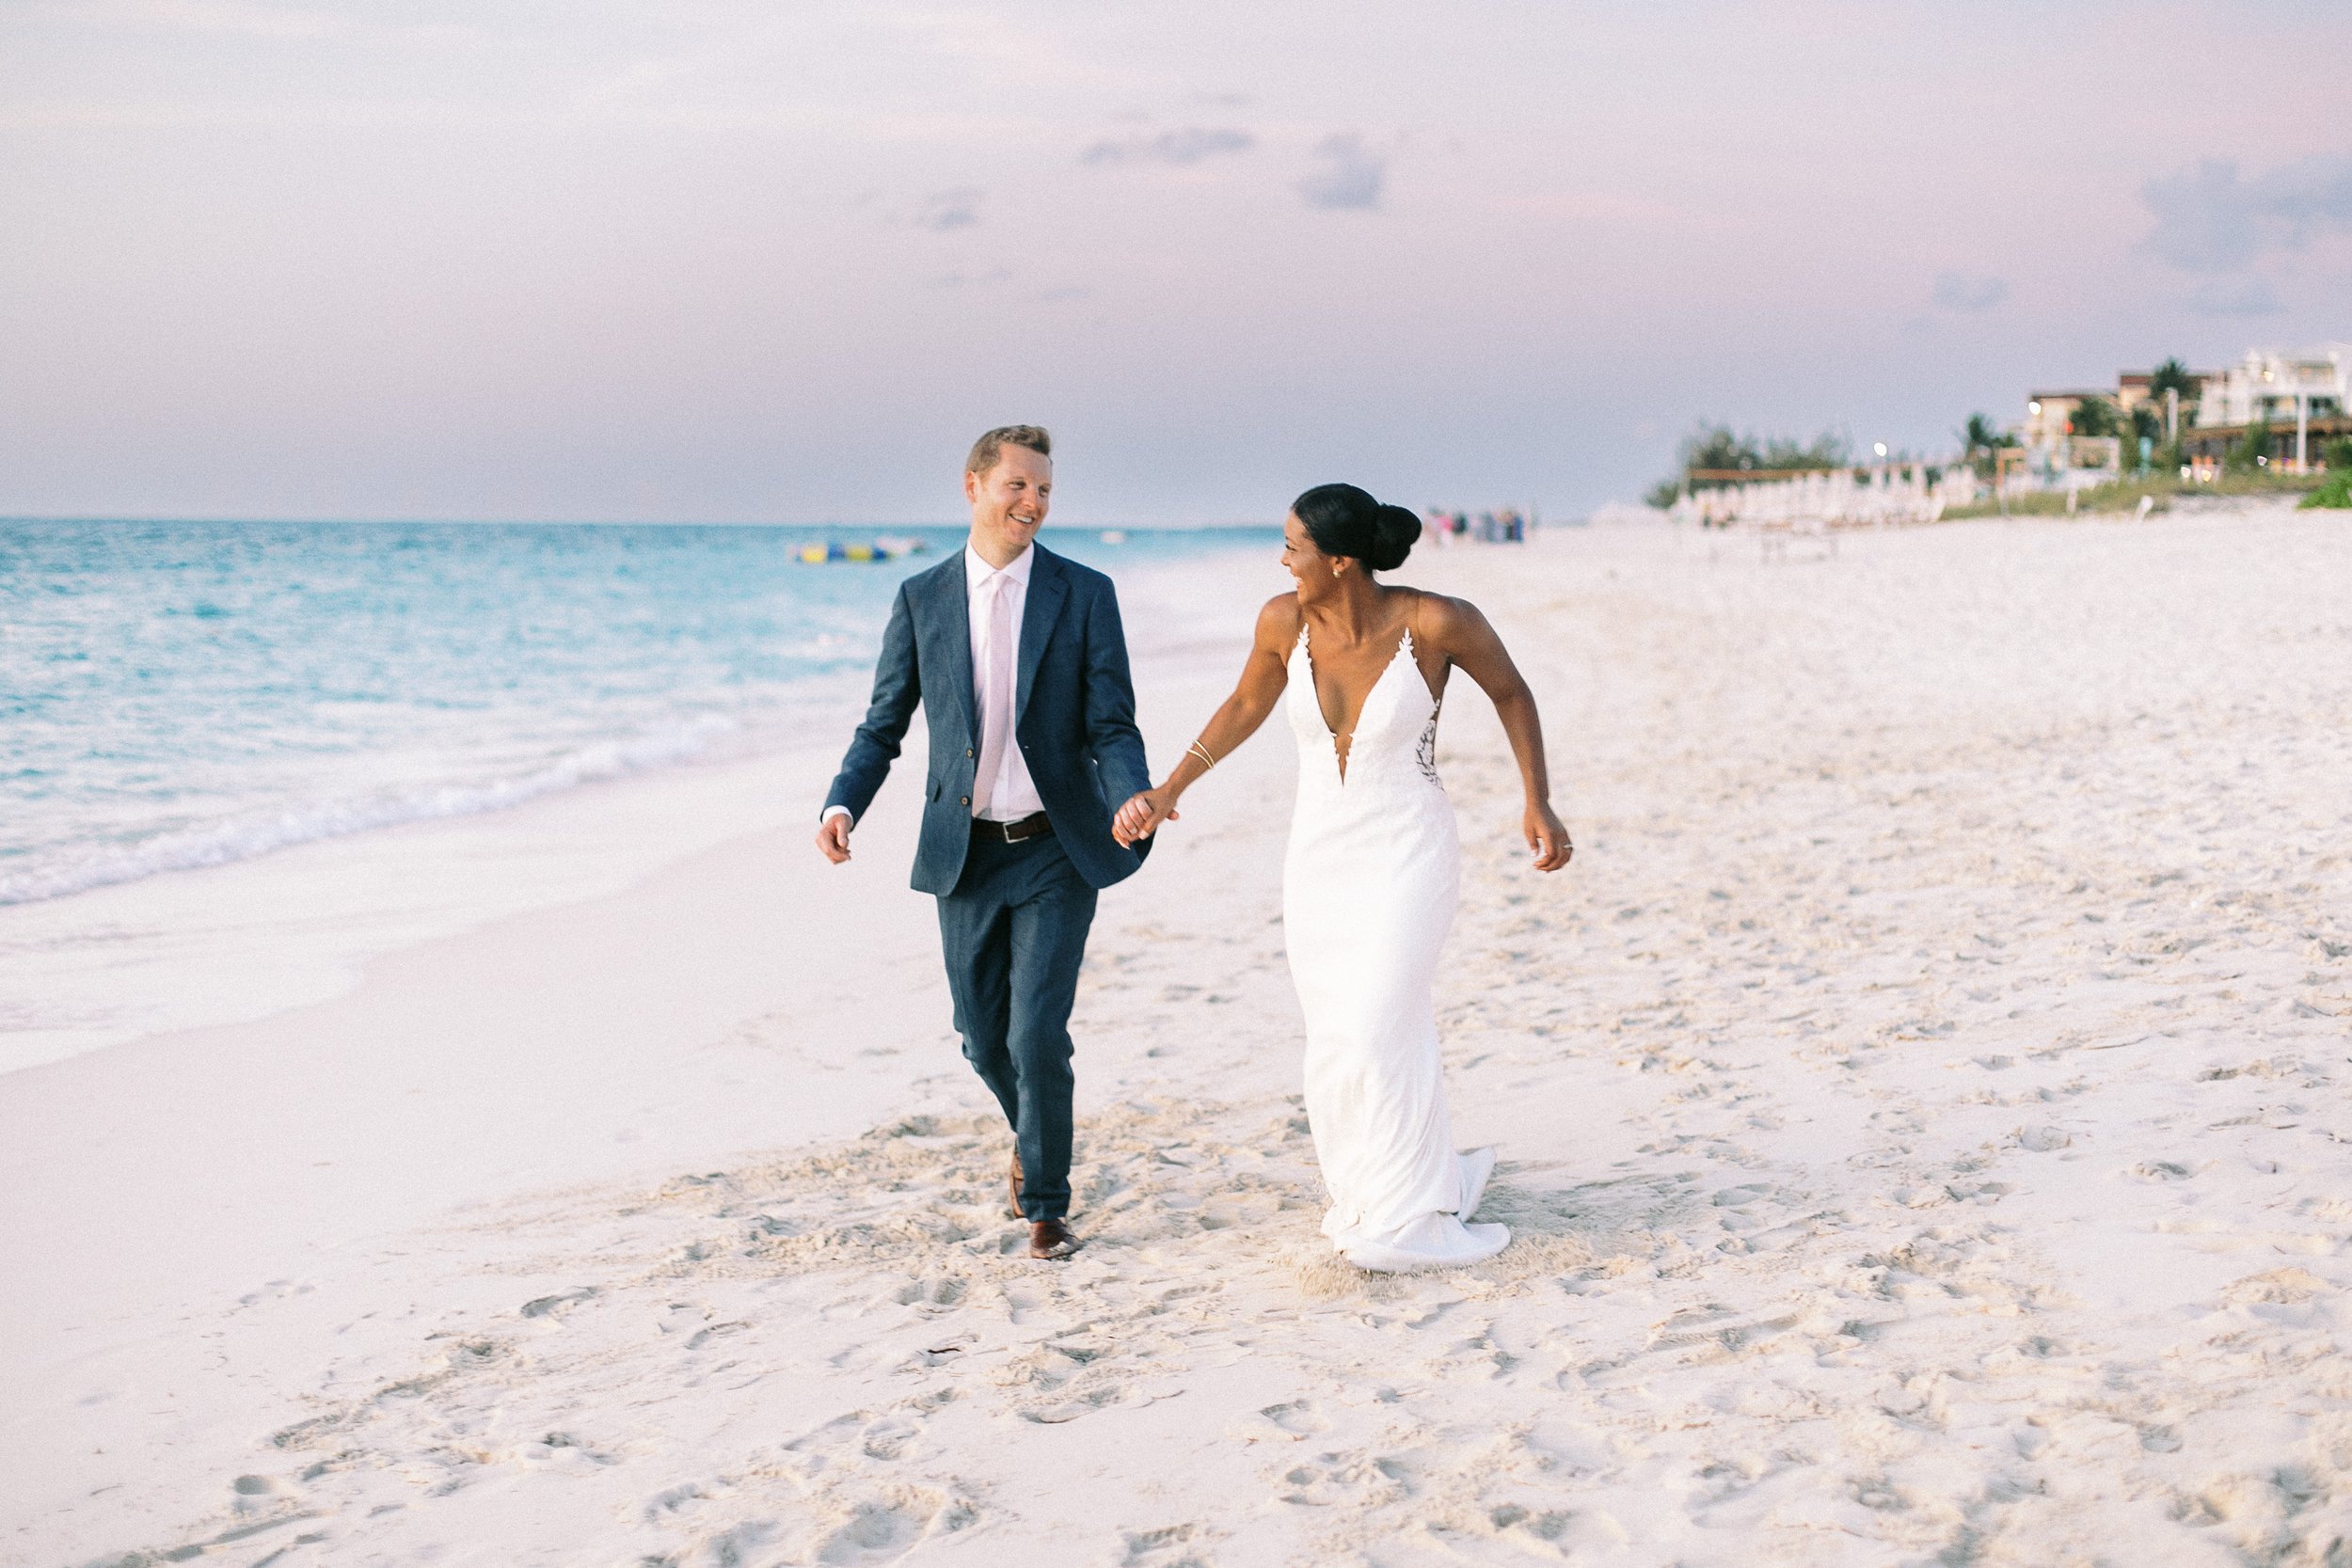 Beaches Turks & Caicos Destination Wedding - Victoria & John (22).jpg